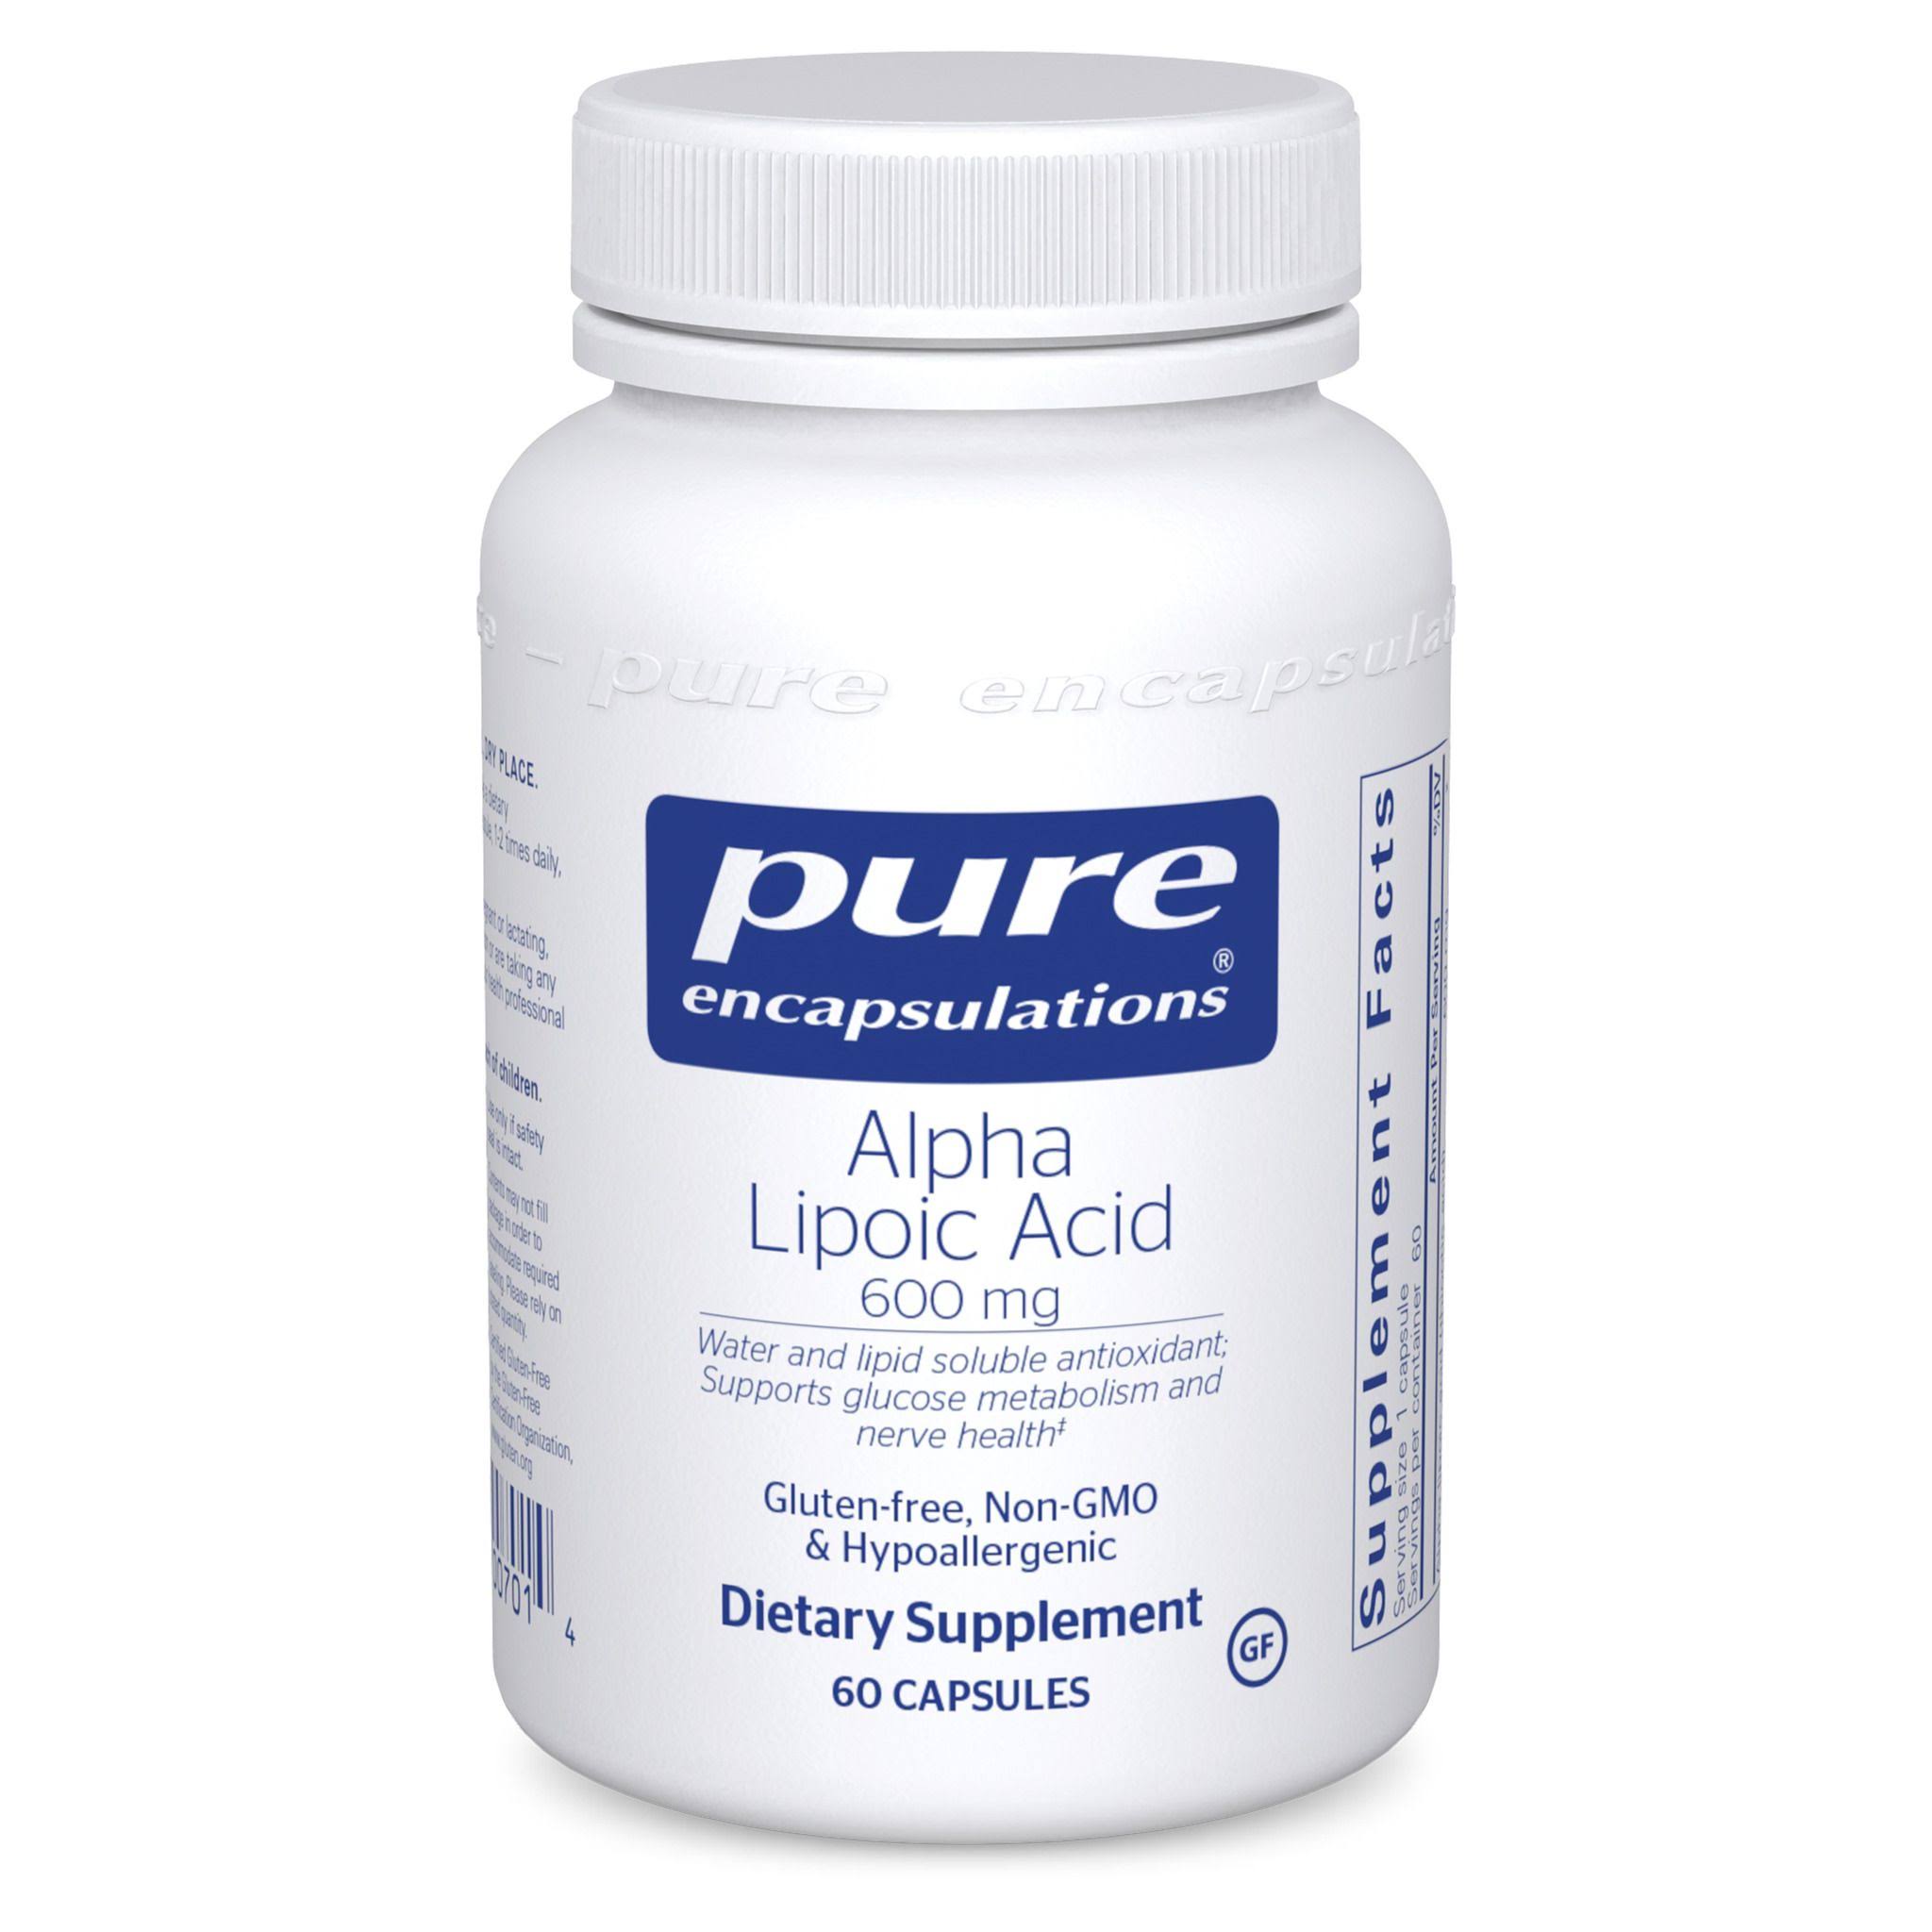 Pure Encapsulations Alpha Lipoic Acid Supplement - 600mg, 60ct